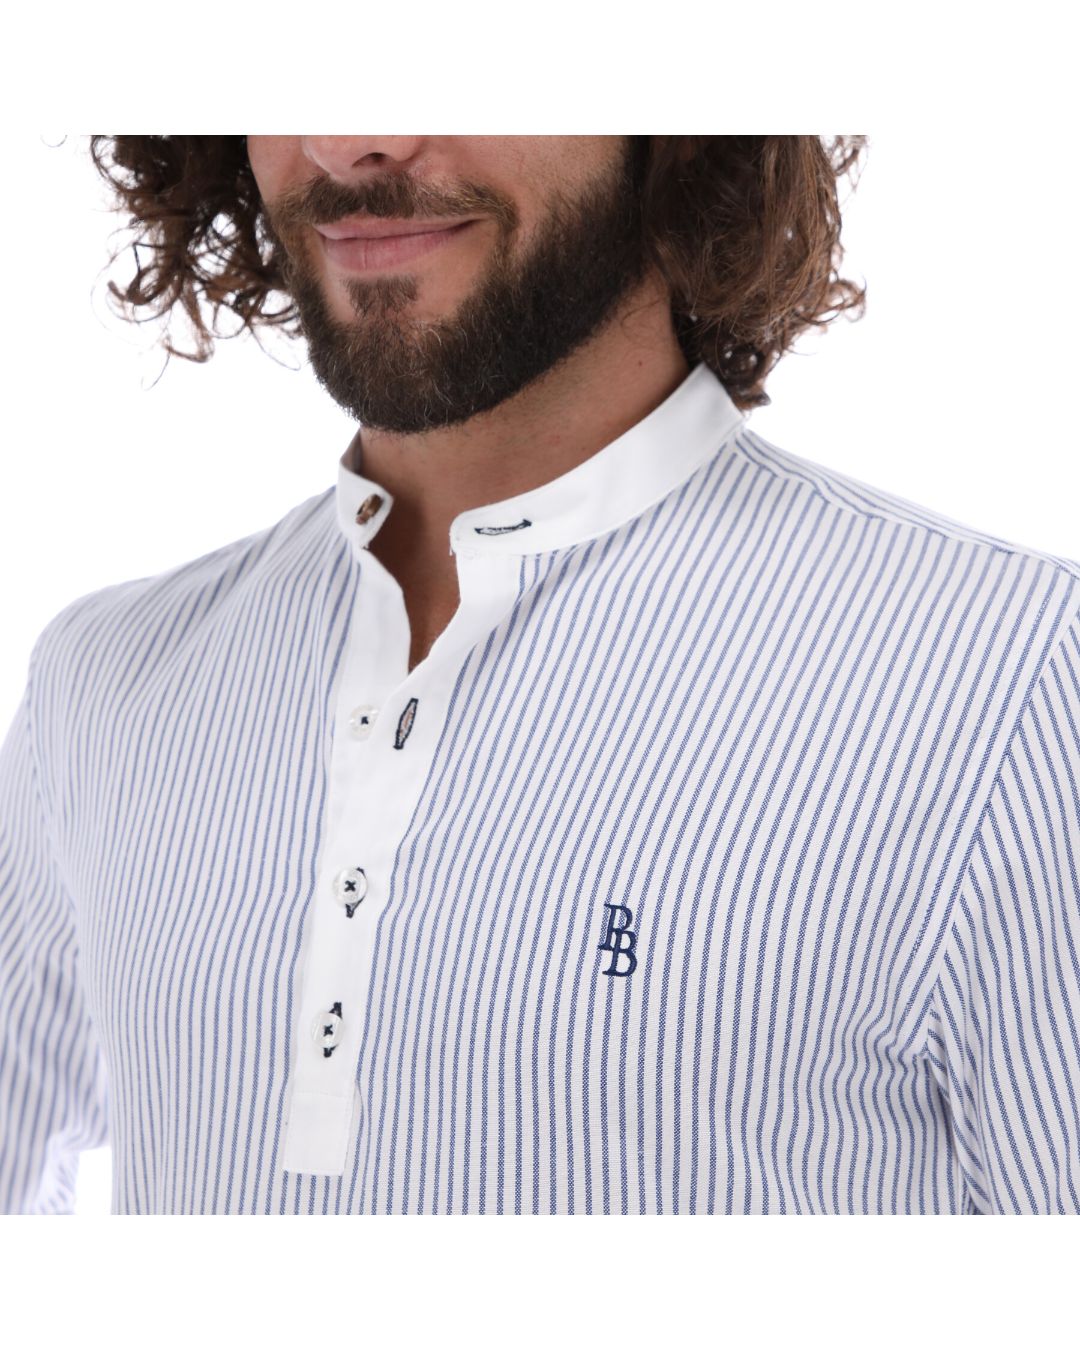 Men's Stripes Long Sleeve Button Down Shirt White & Blue